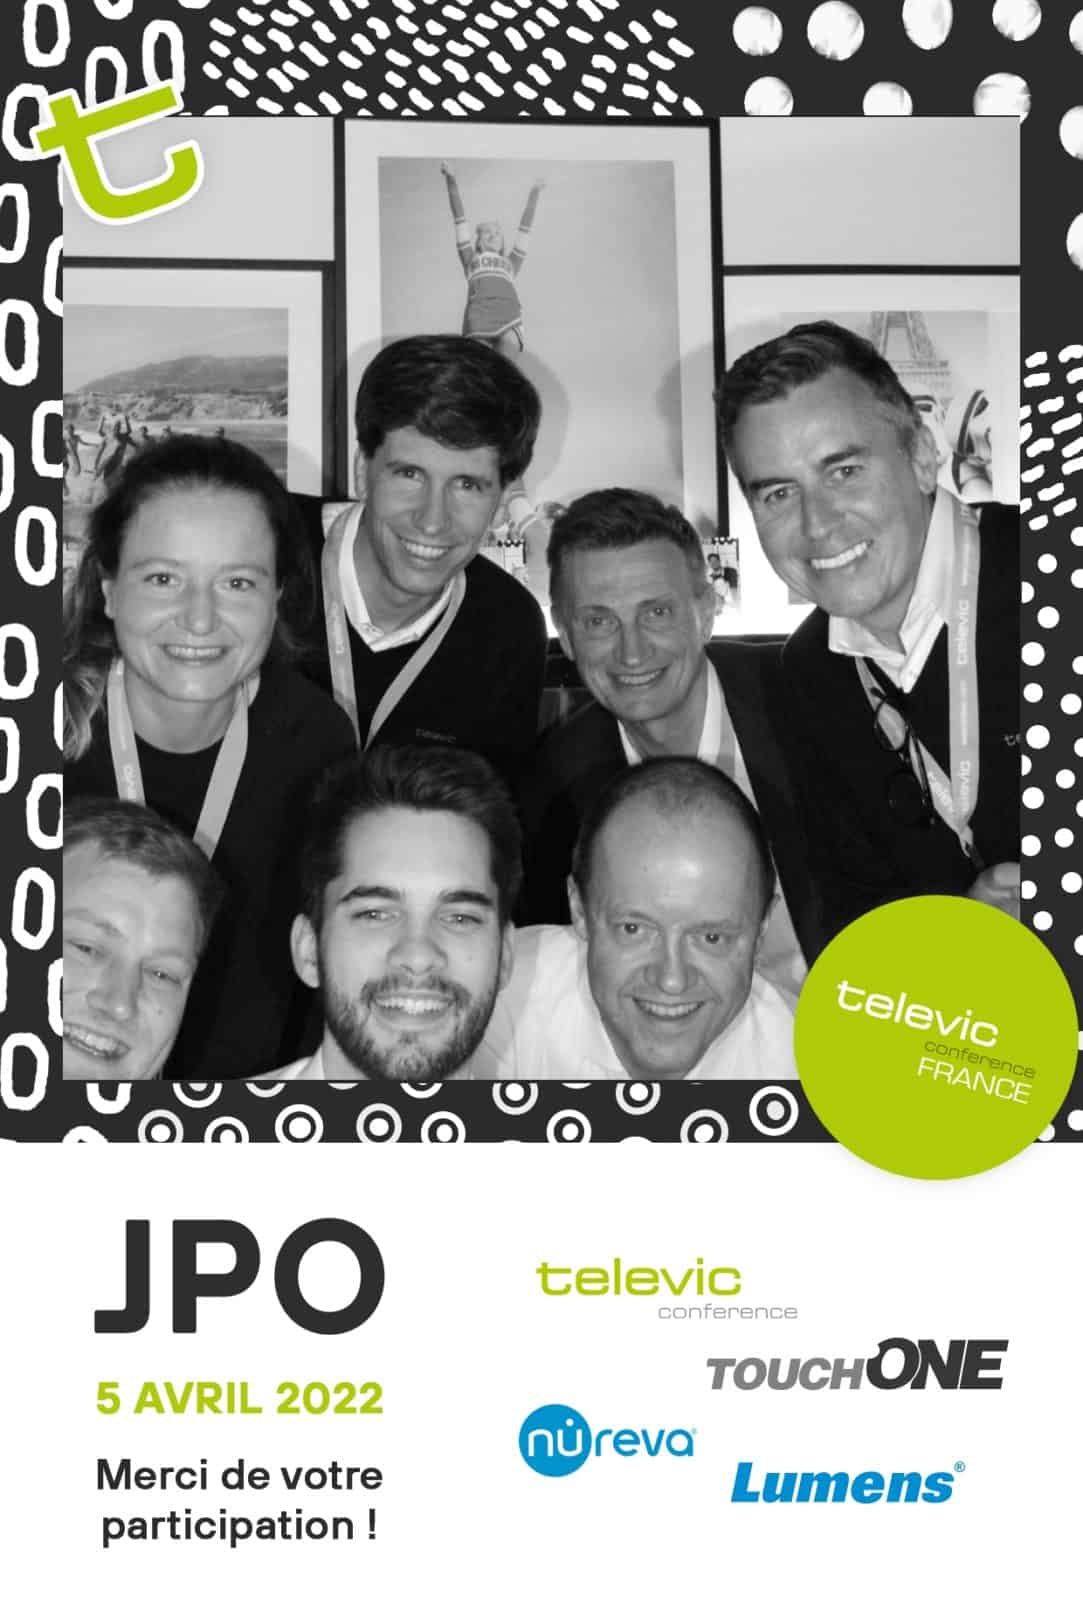 Borne Photo JPO Televic 39